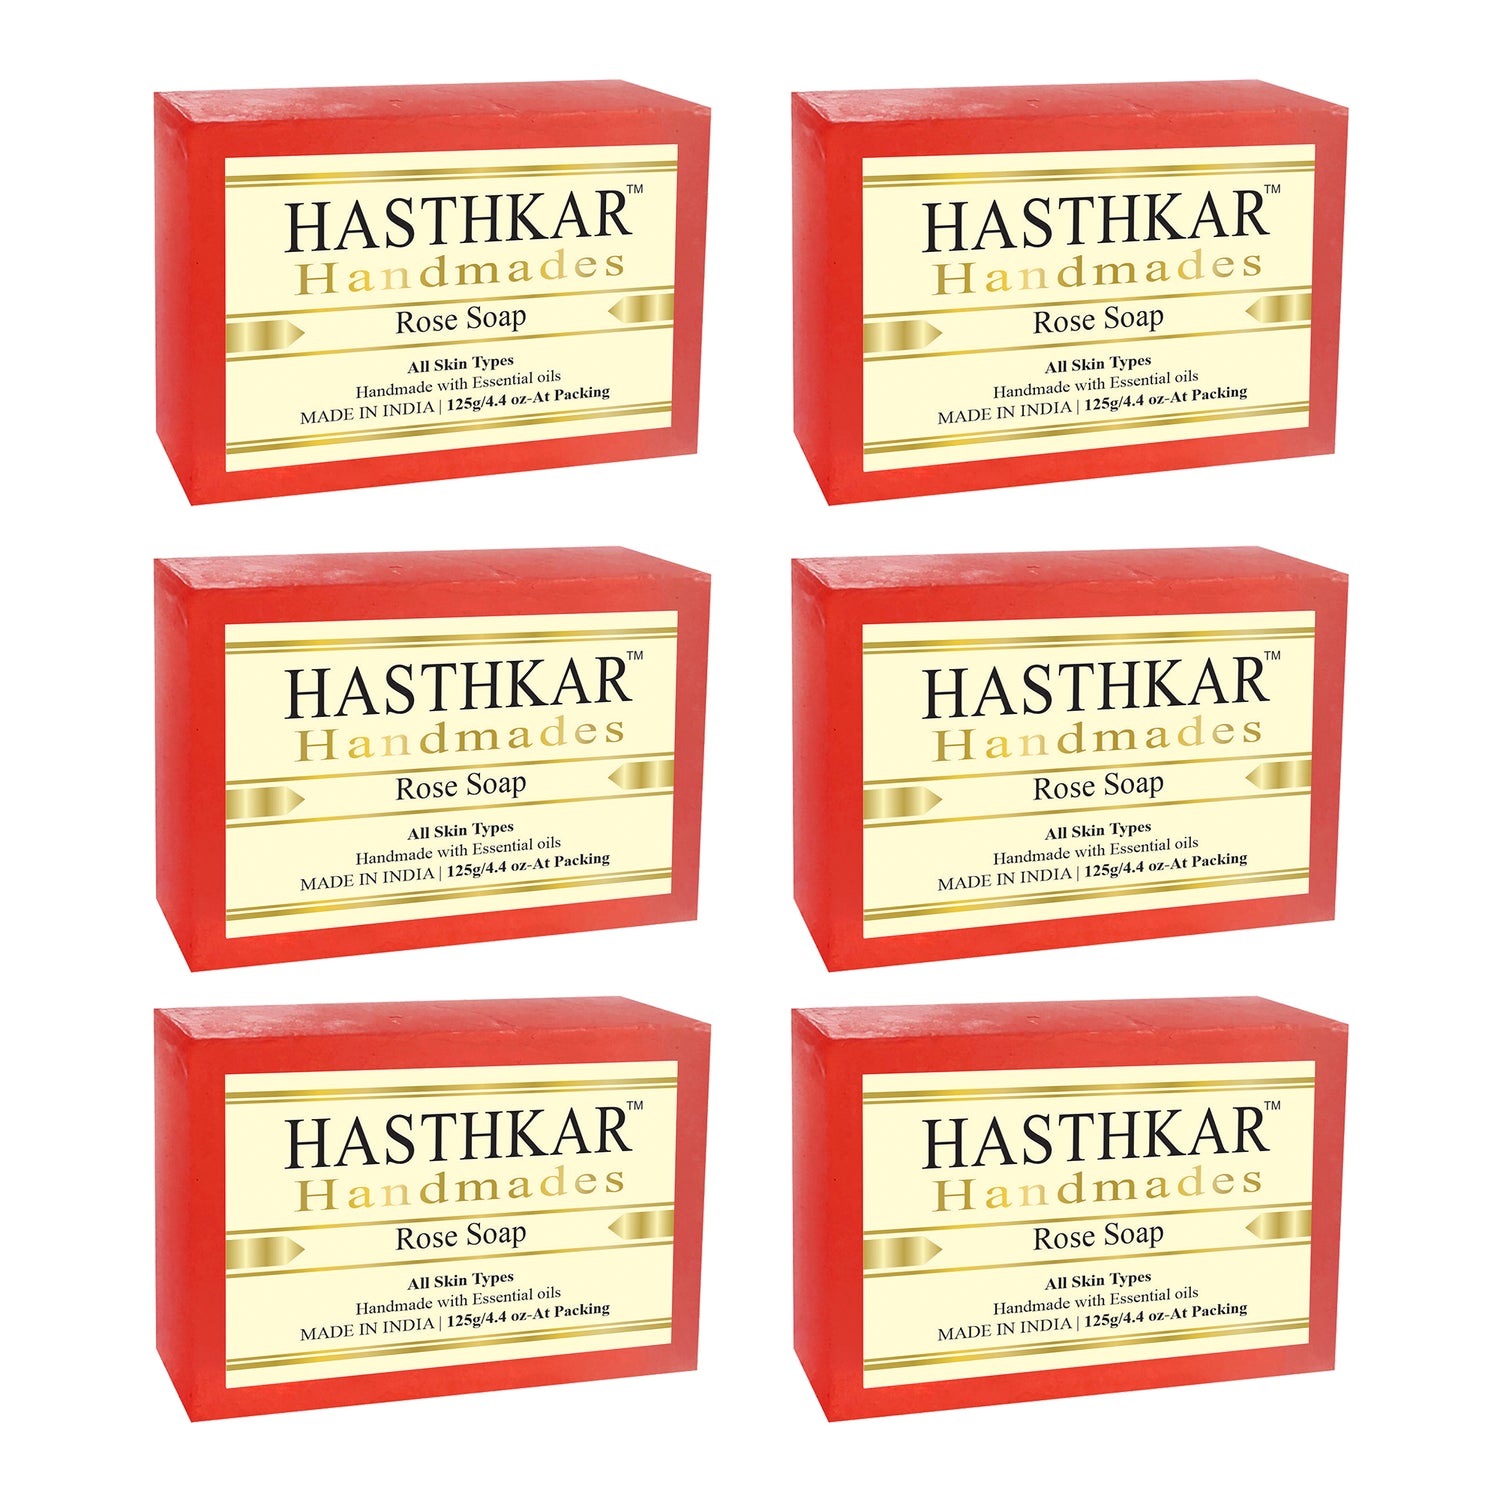 Hasthkar handmades rose bath soap men and women pack of 6